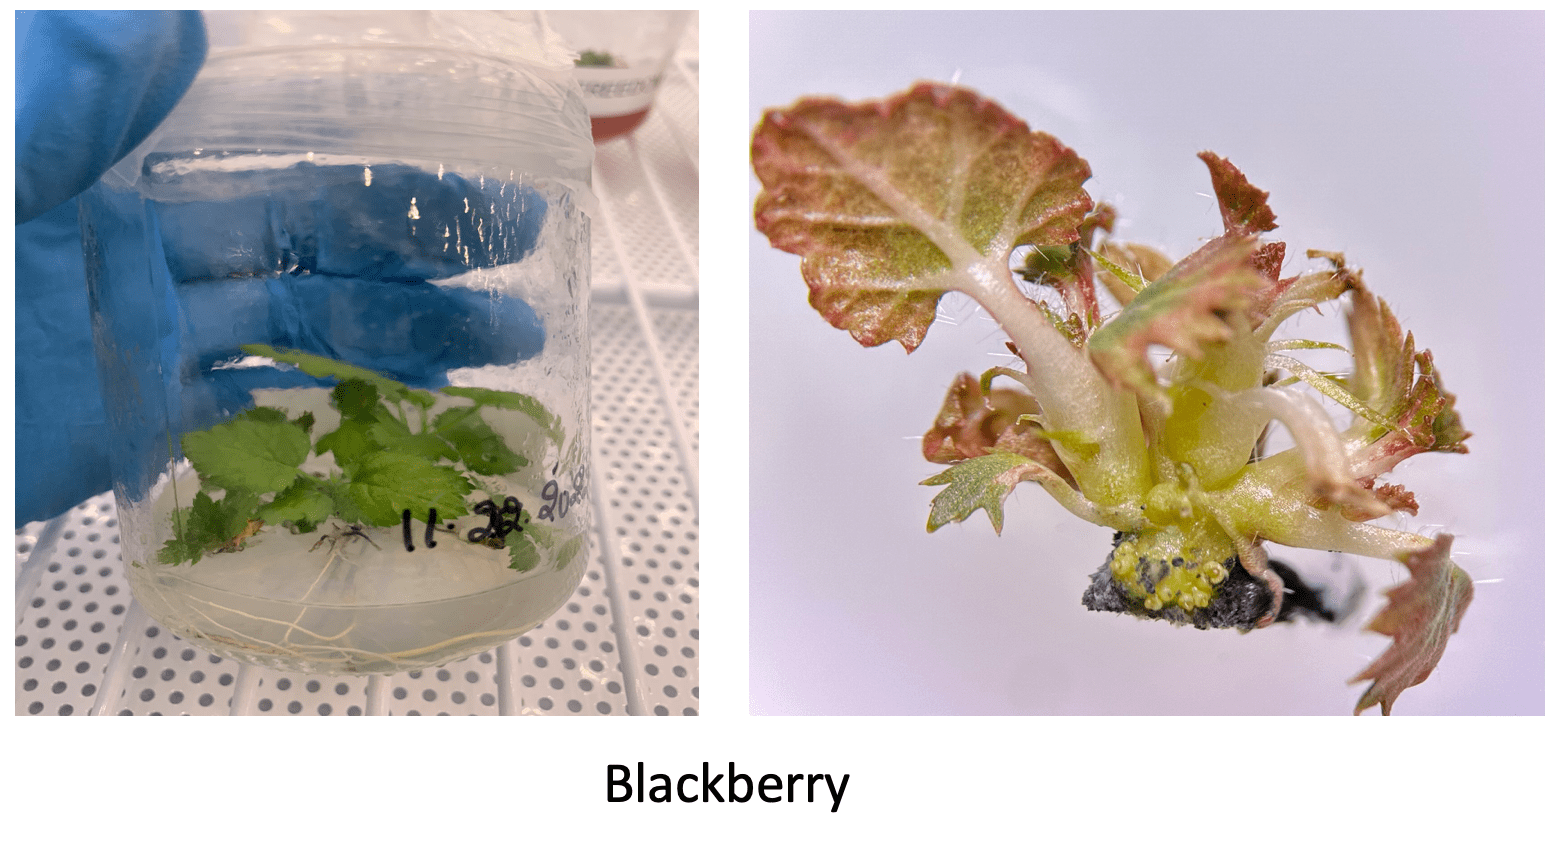 In vitro micropropagation of Blackberries